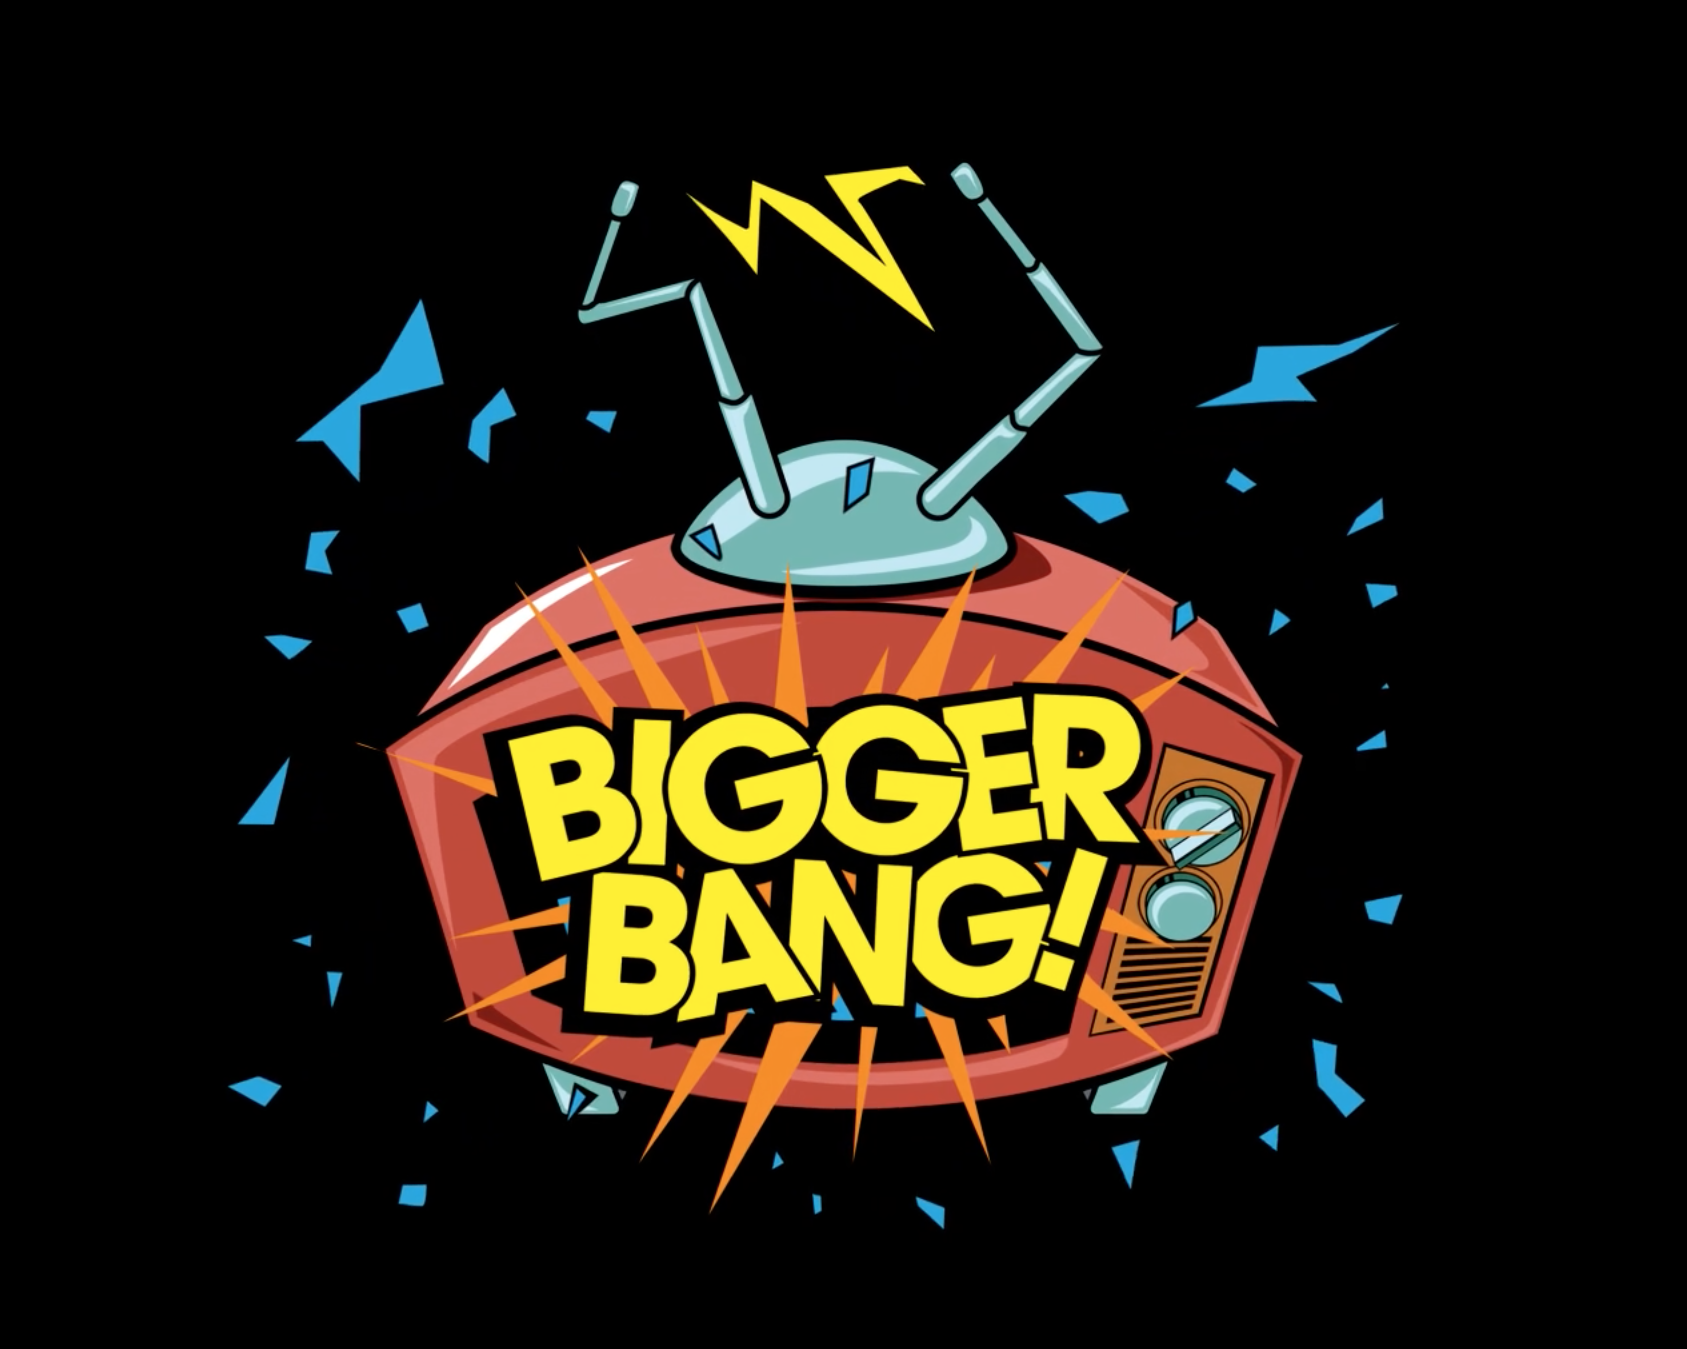 Thank You - Torey Pudwill's "Bigger Bang" Part cover